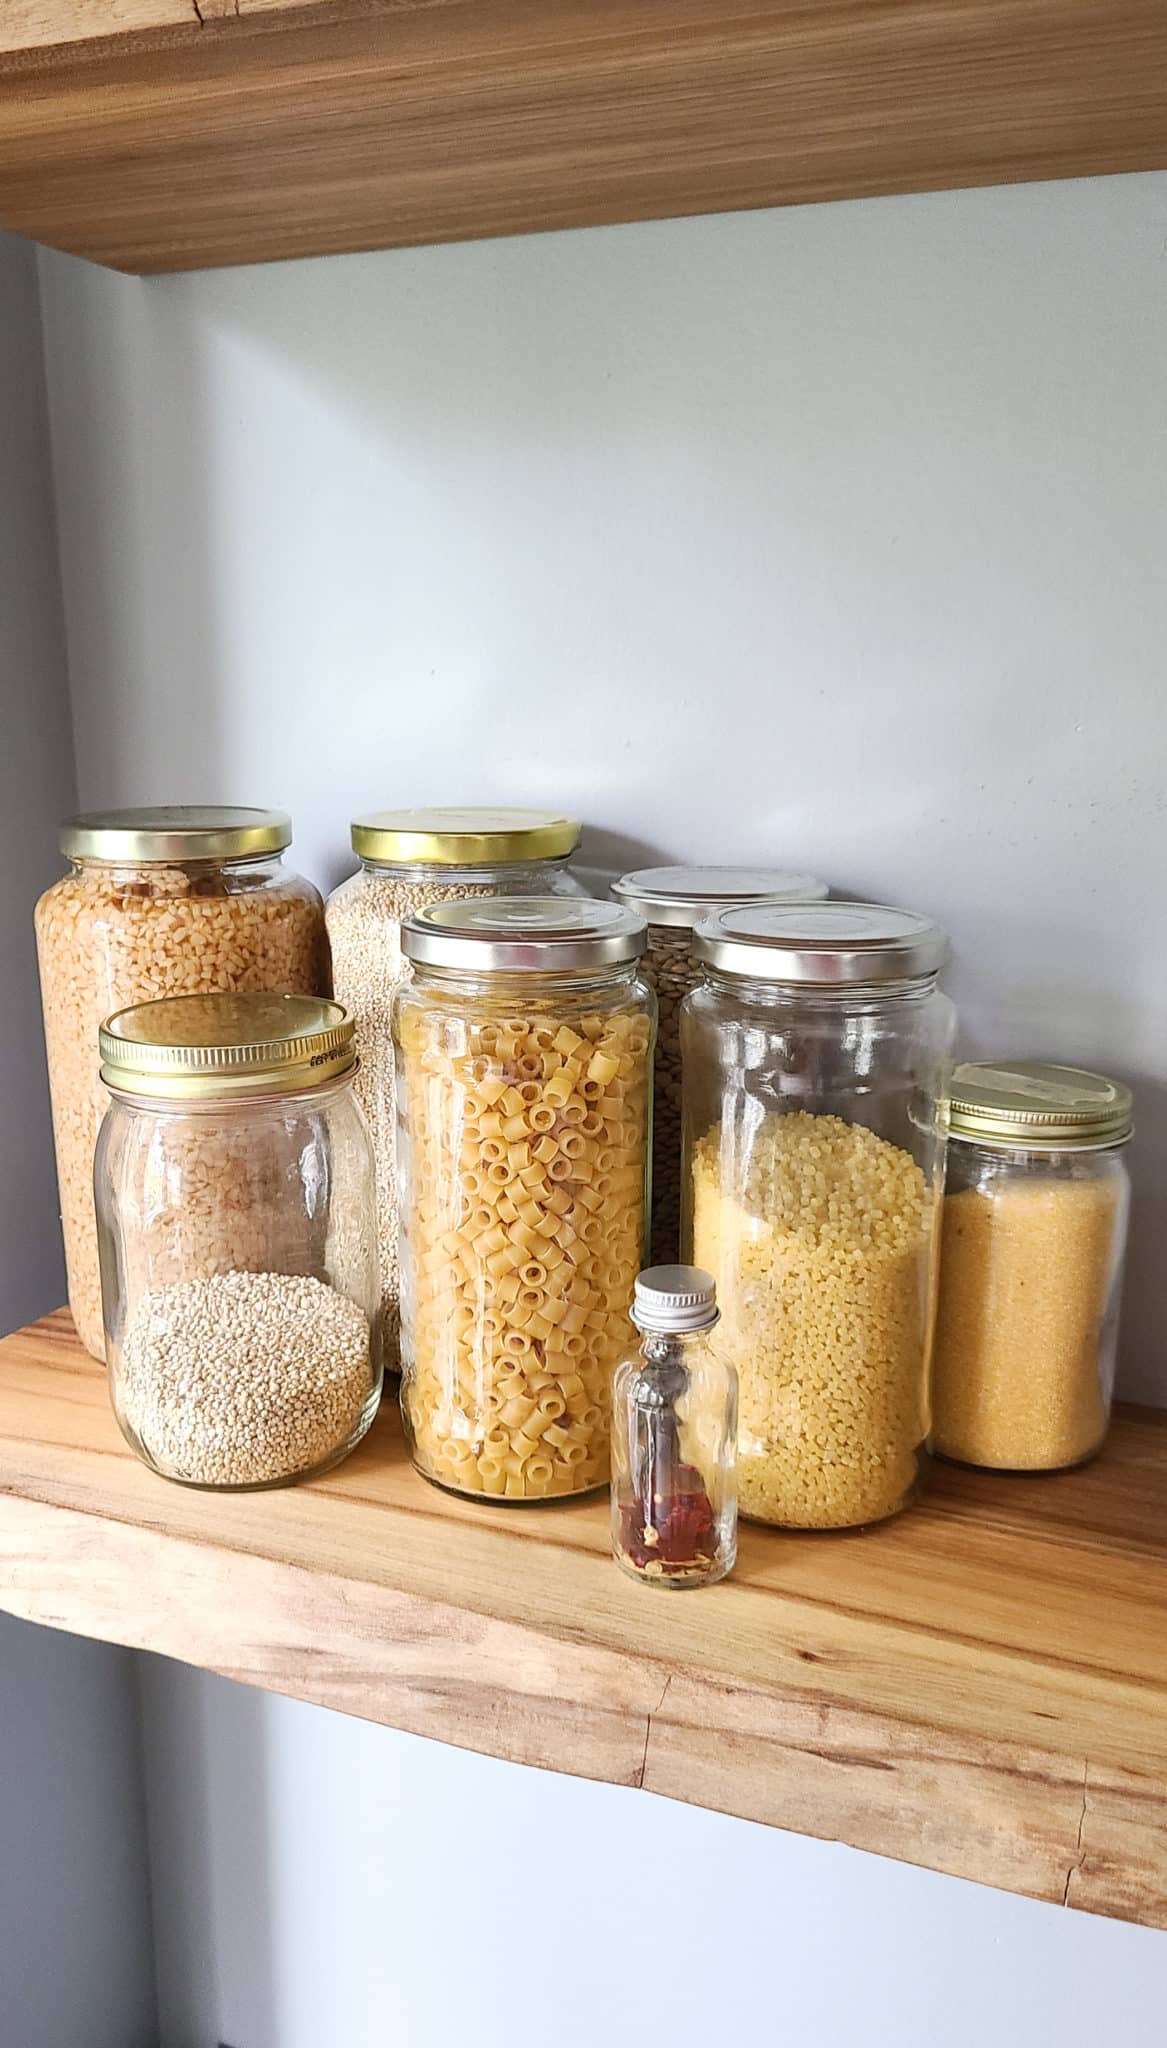 DIY organization idea - reusing emptied food jars for herbs and bulk storage